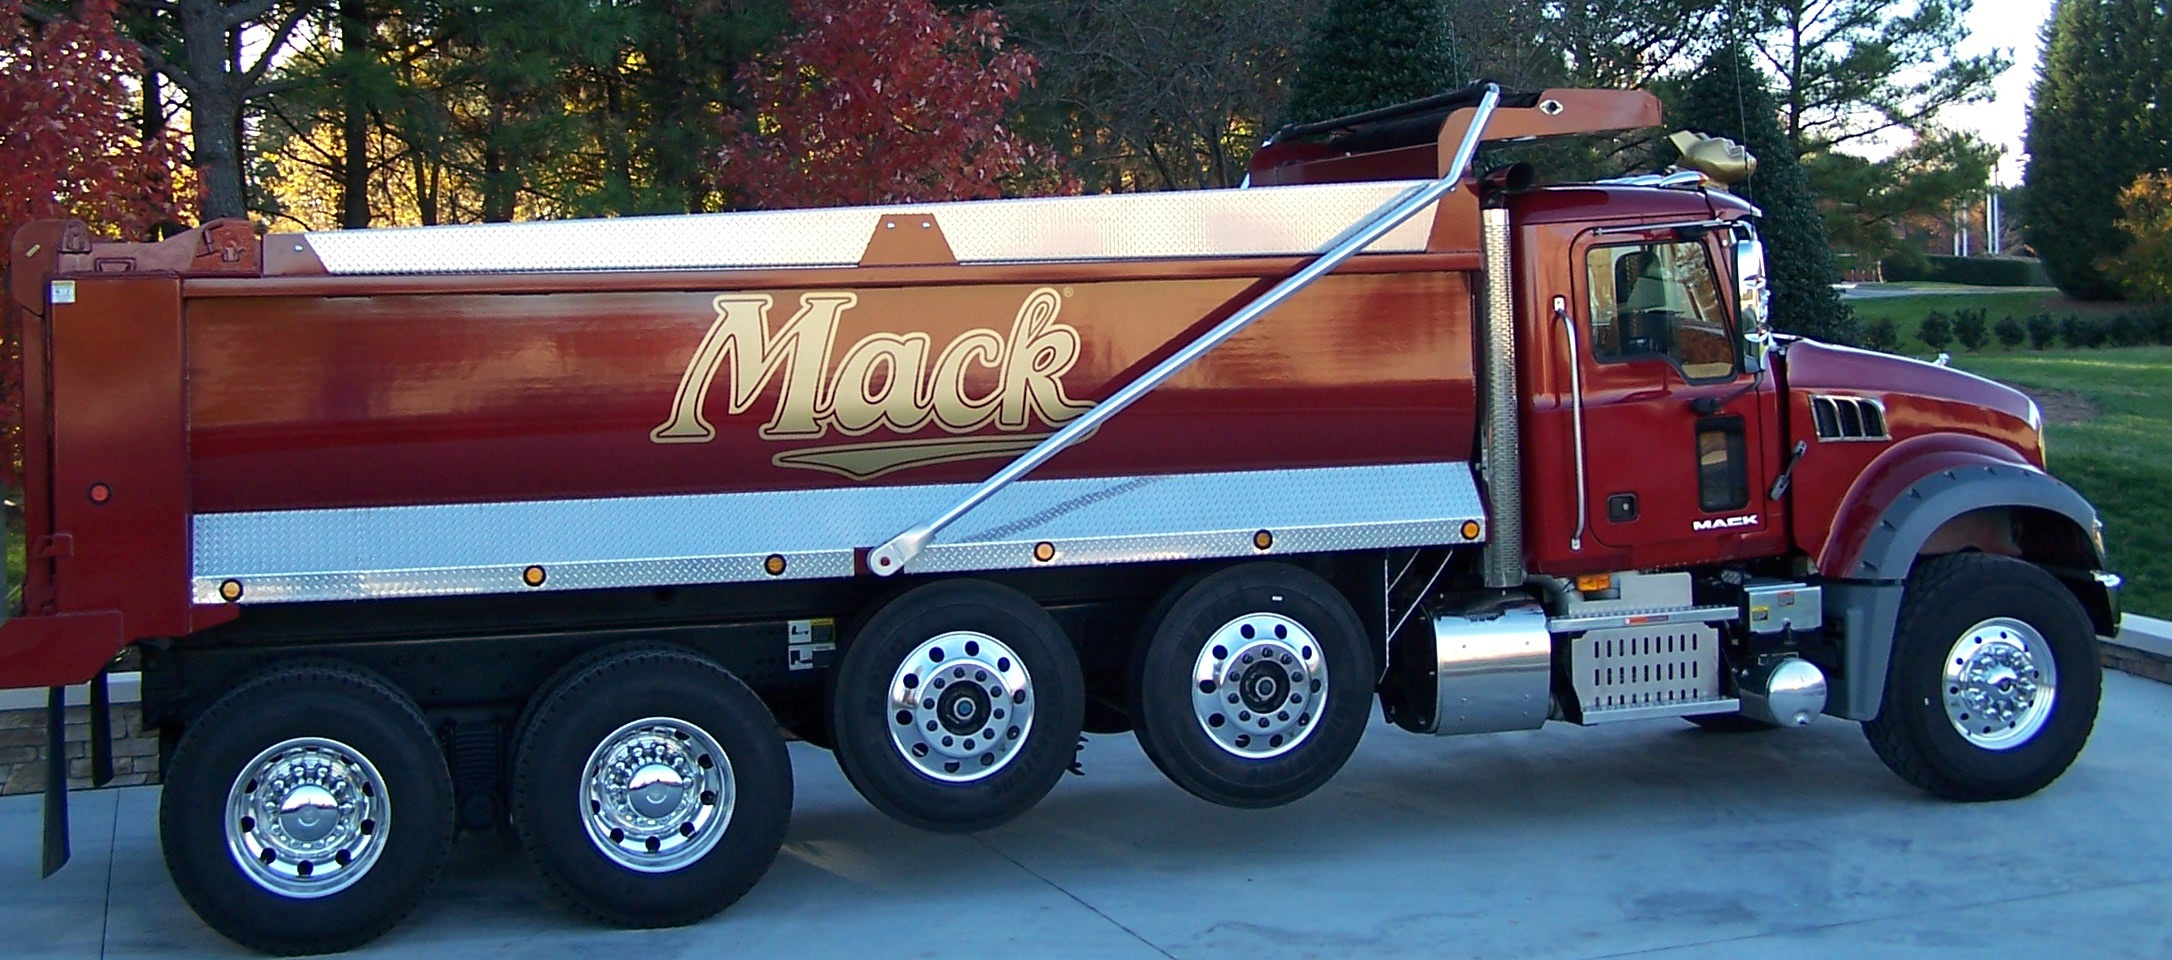 Vehicles Mack Trucks 2172x960